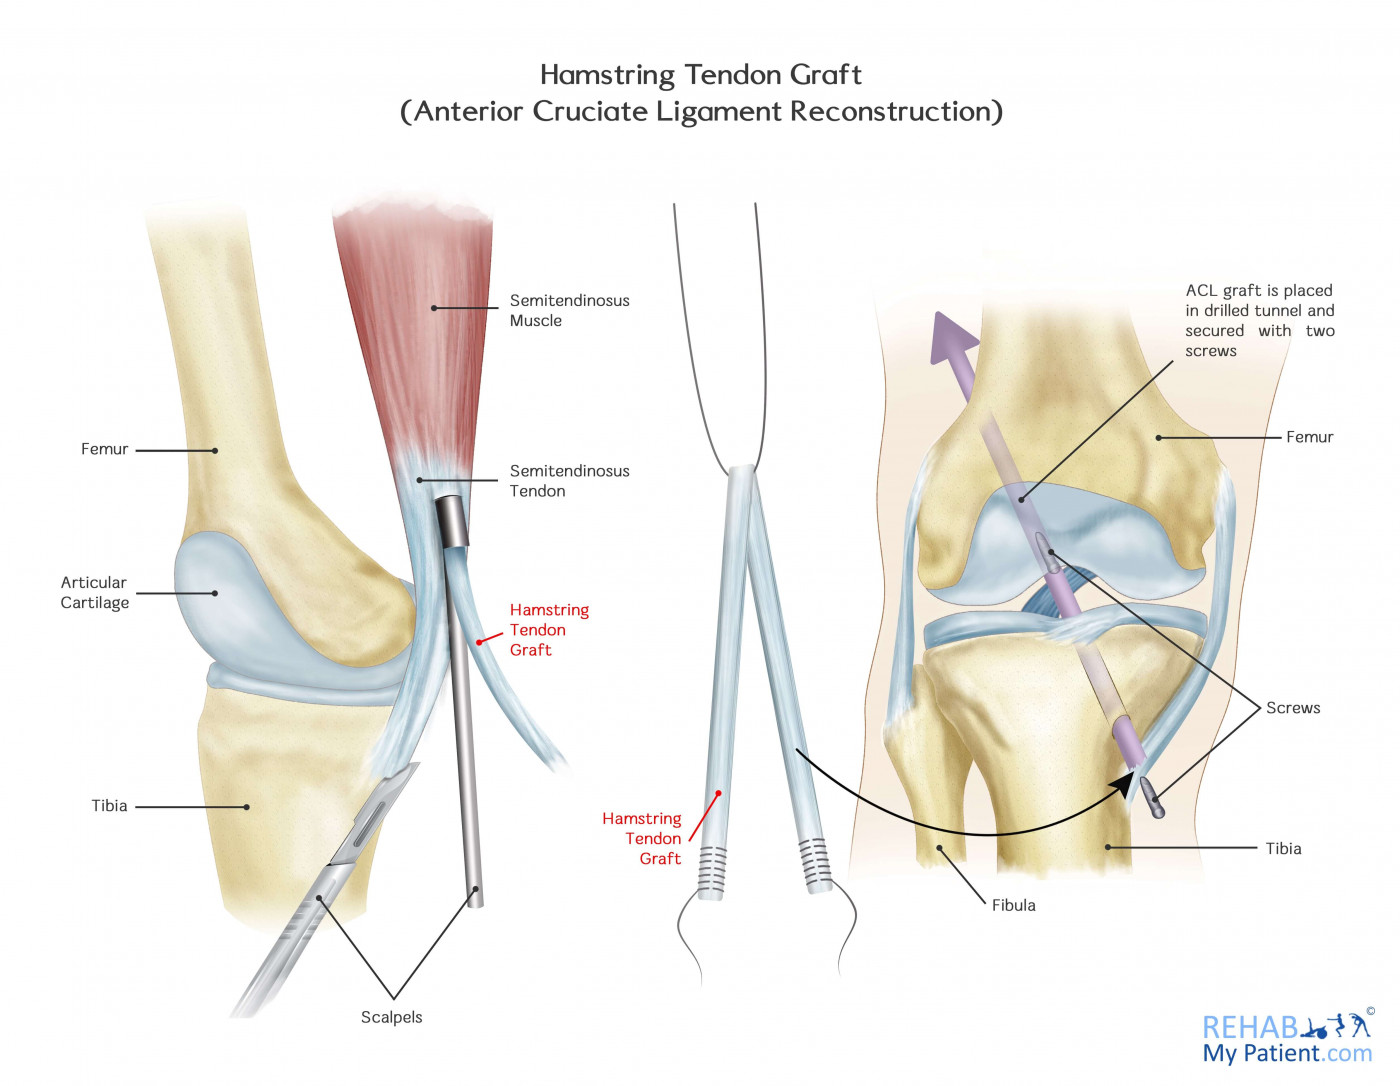 Anterior Cruciate Ligament Rupture and Reconstruction